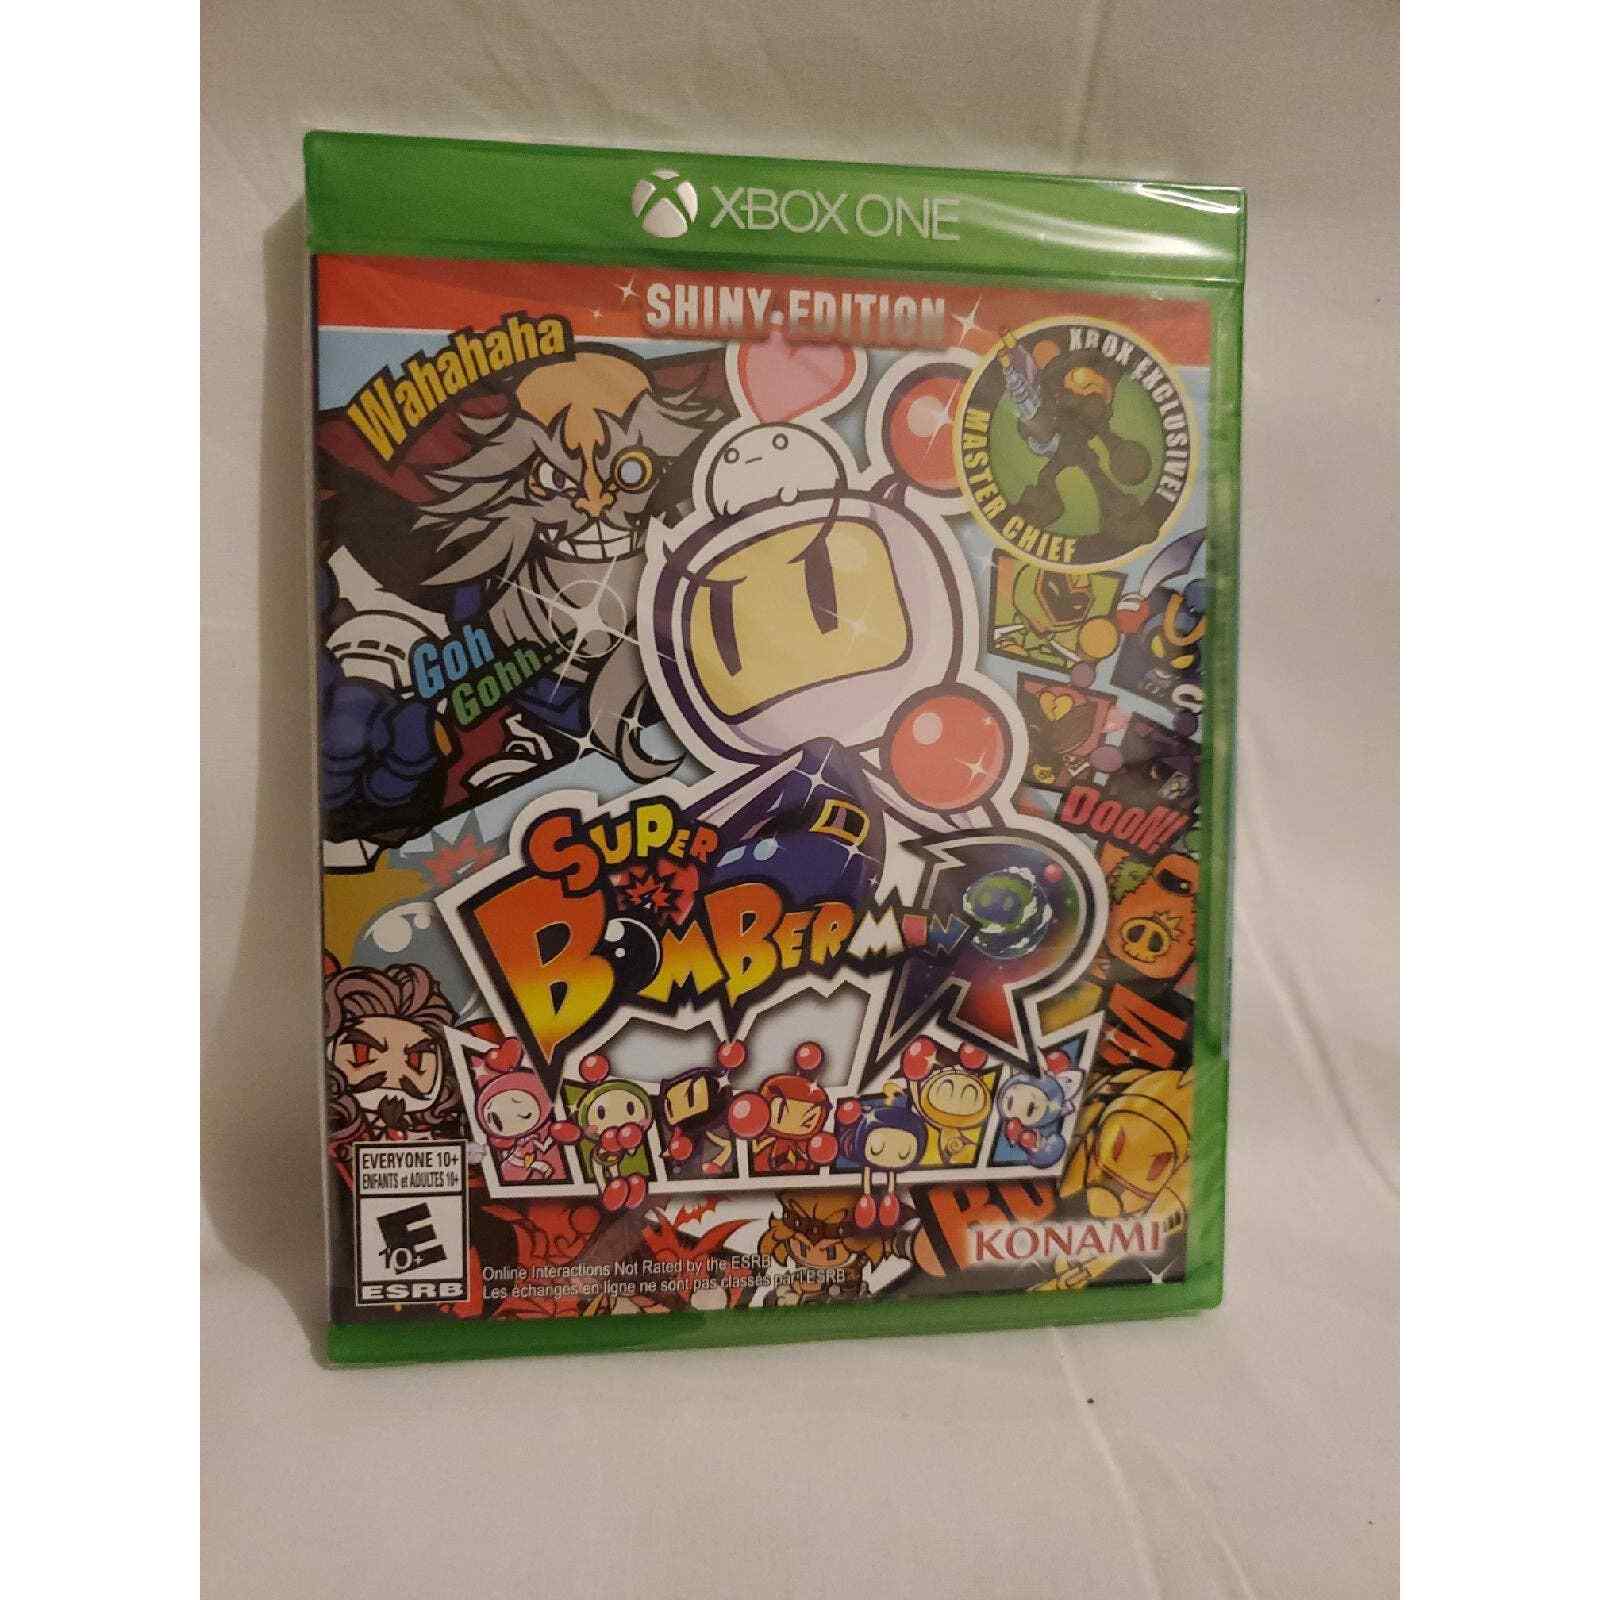 Previs site bijtend merk Super Bomberman R on Xbox One NEW! | eBay